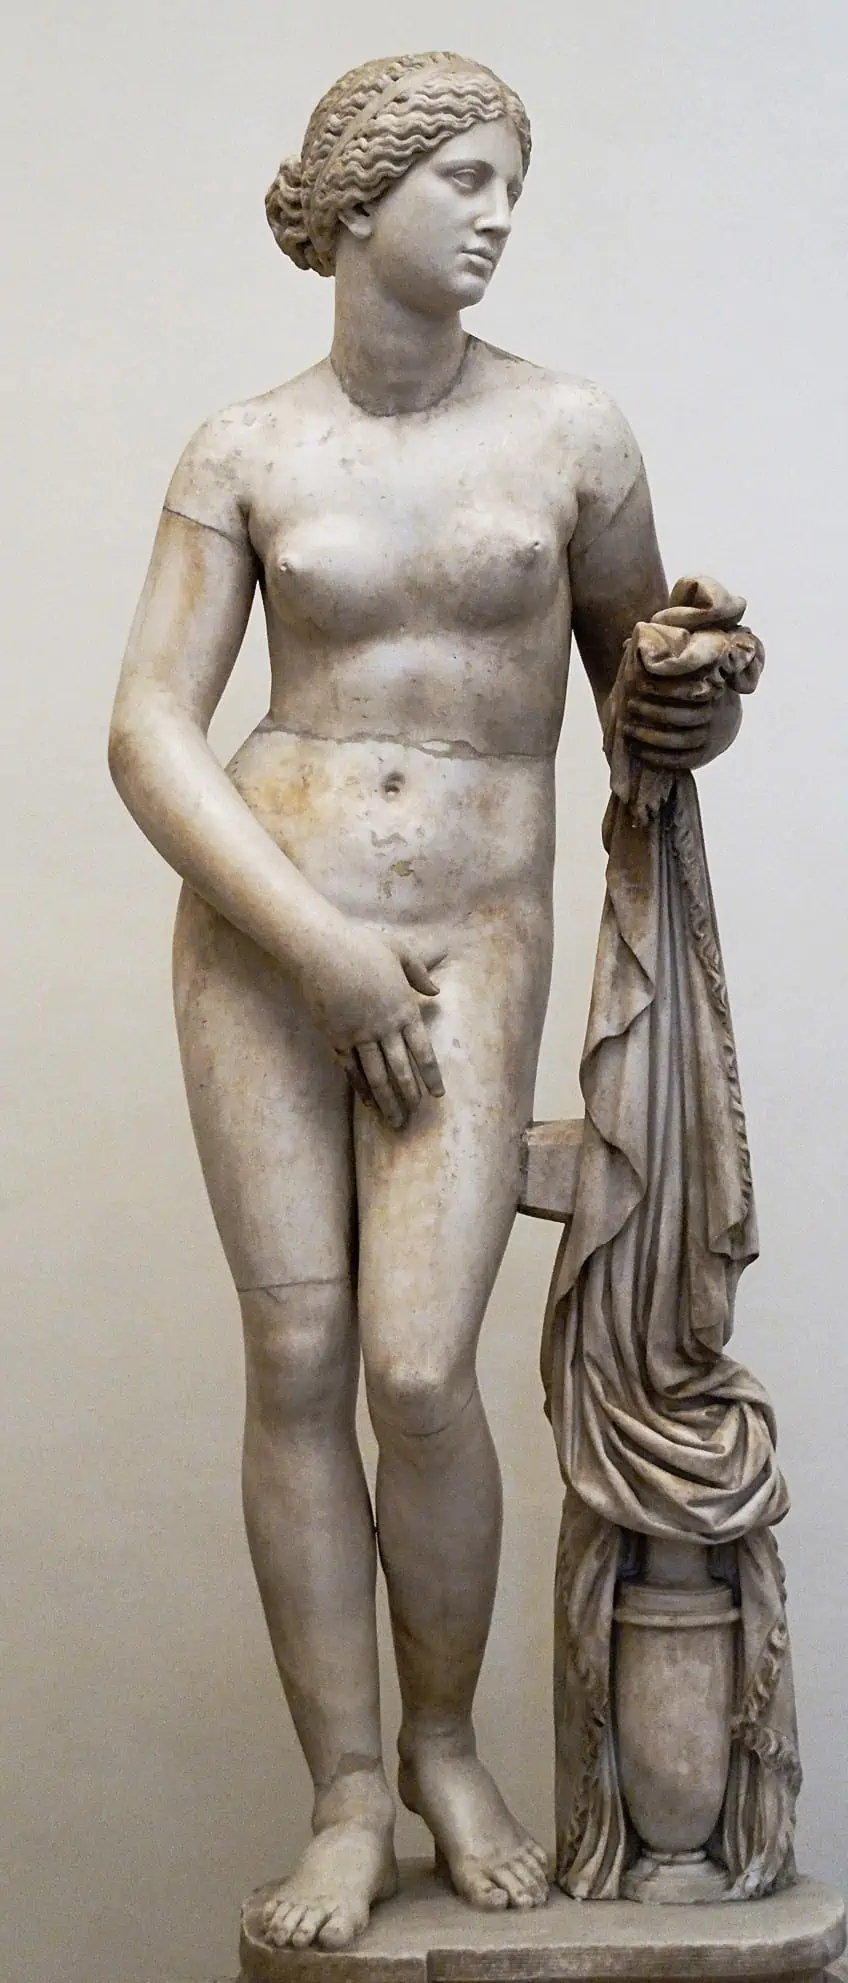 Examples of Female Greek Sculptures